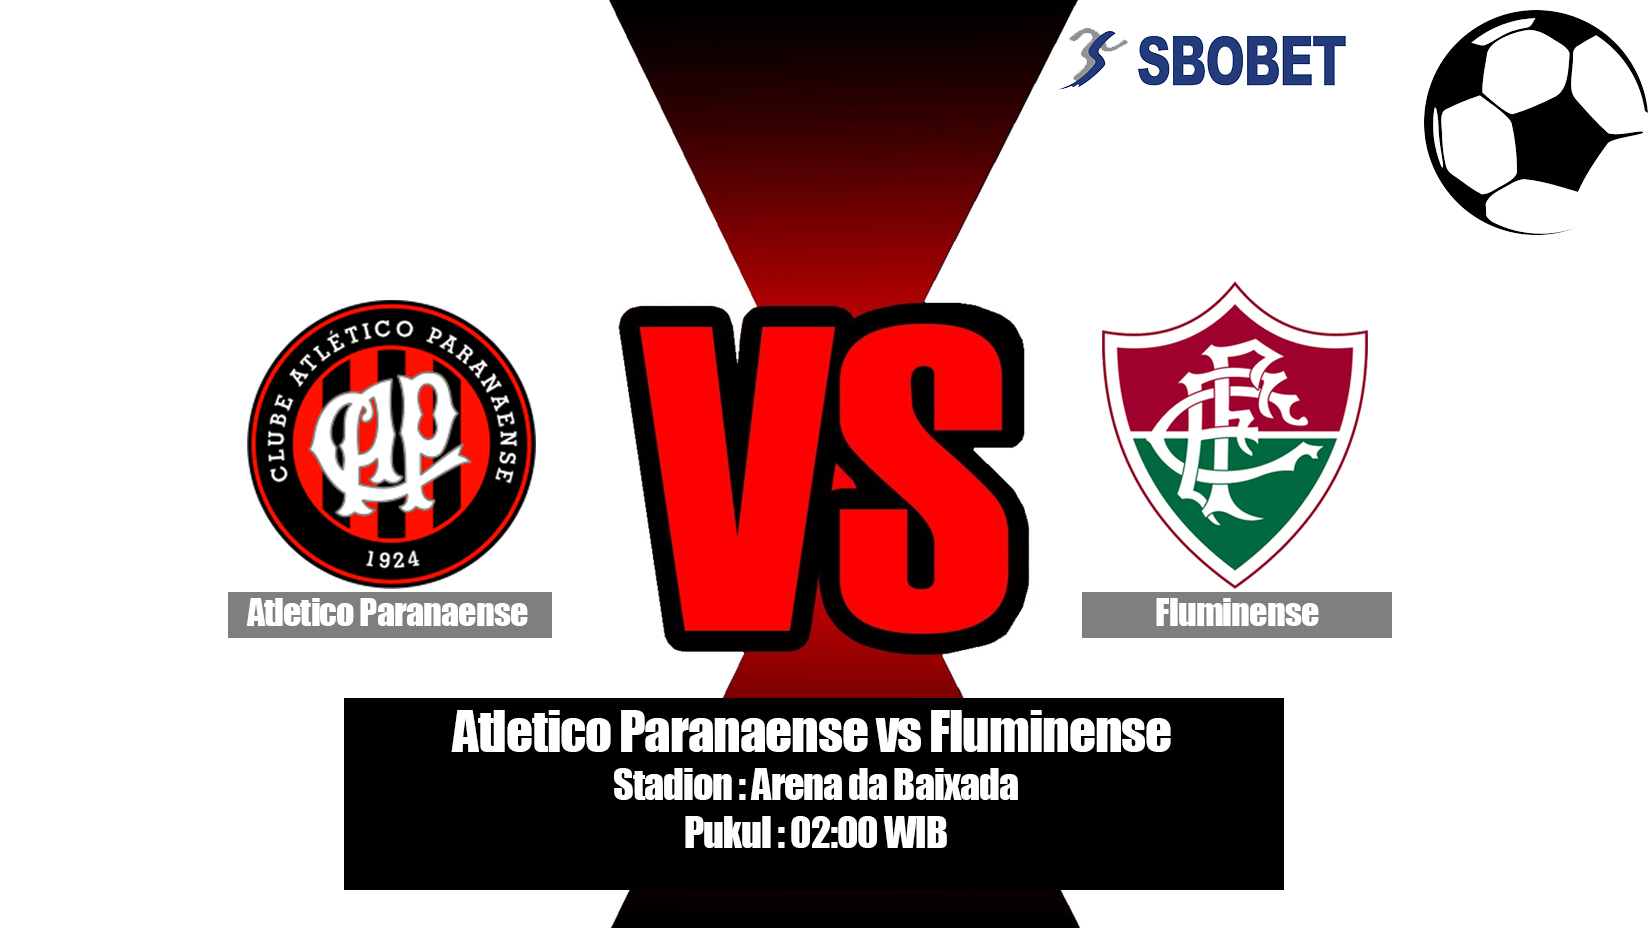 Prediksi Bola Atletico Paranaense vs Fluminense 3 Juni 2019